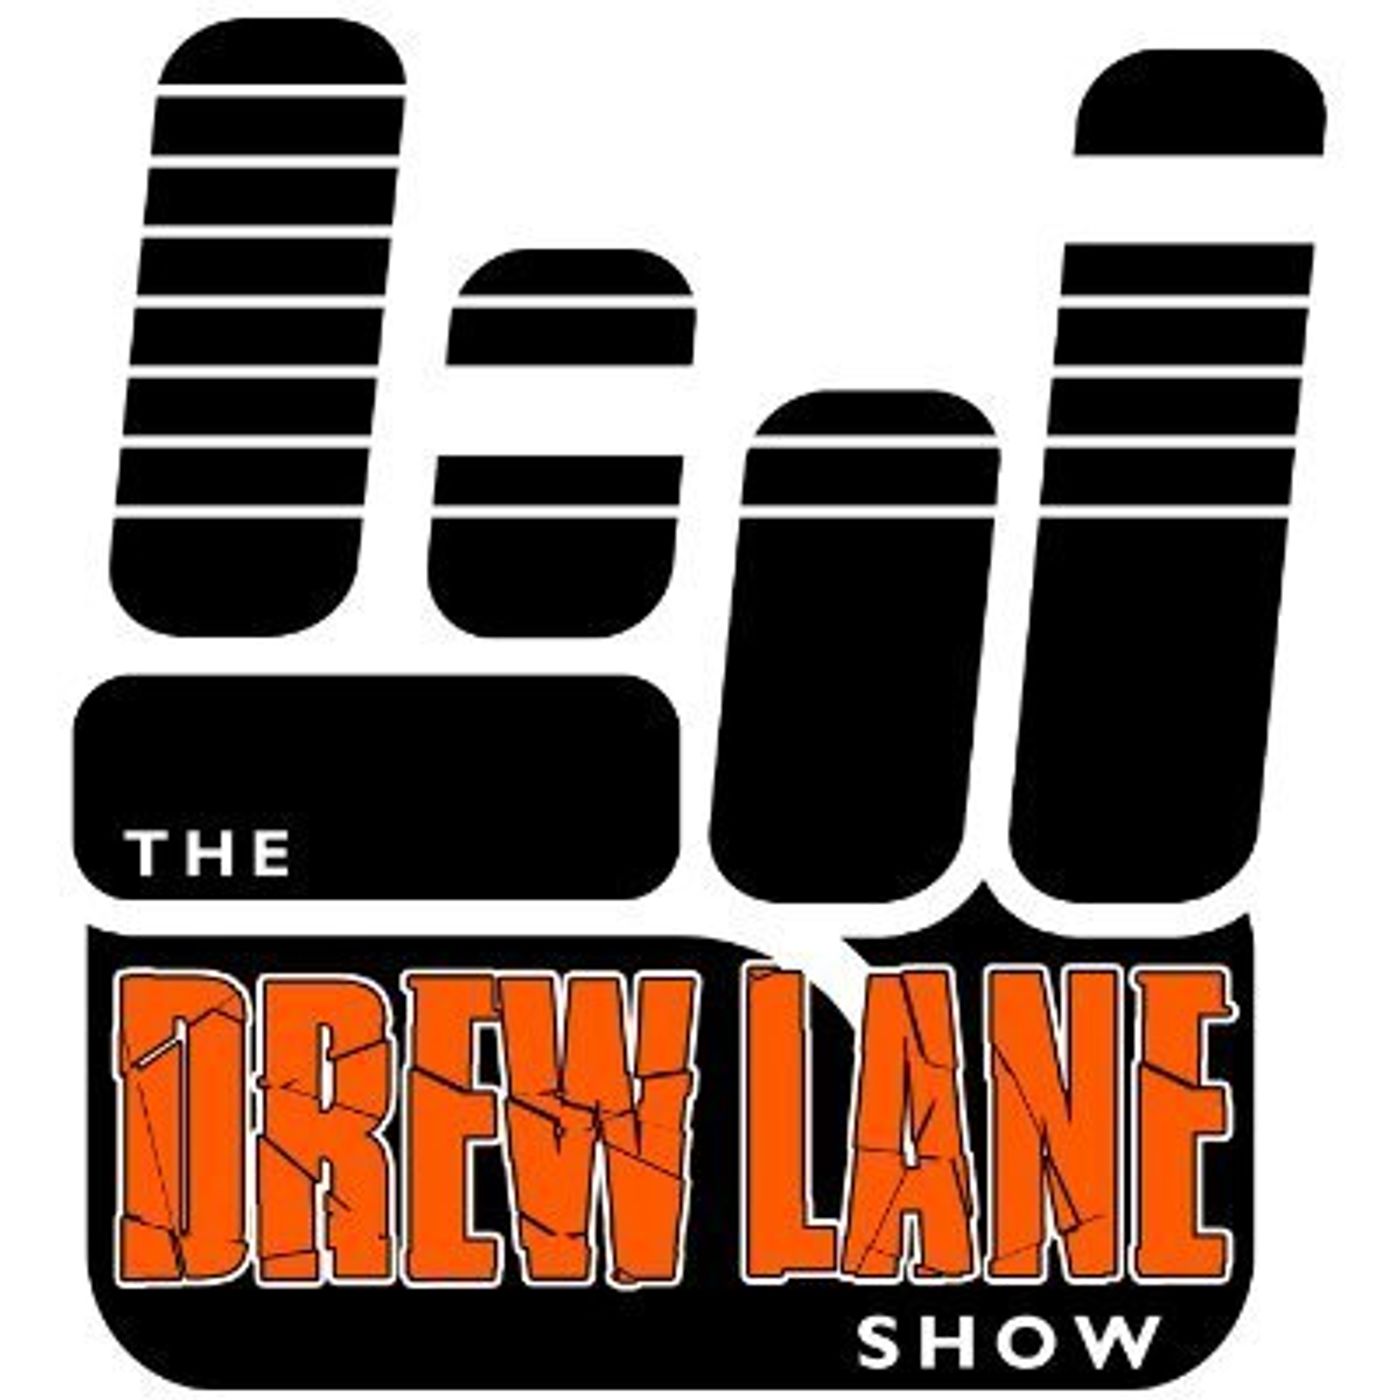 The Drew Lane Show – Best Of